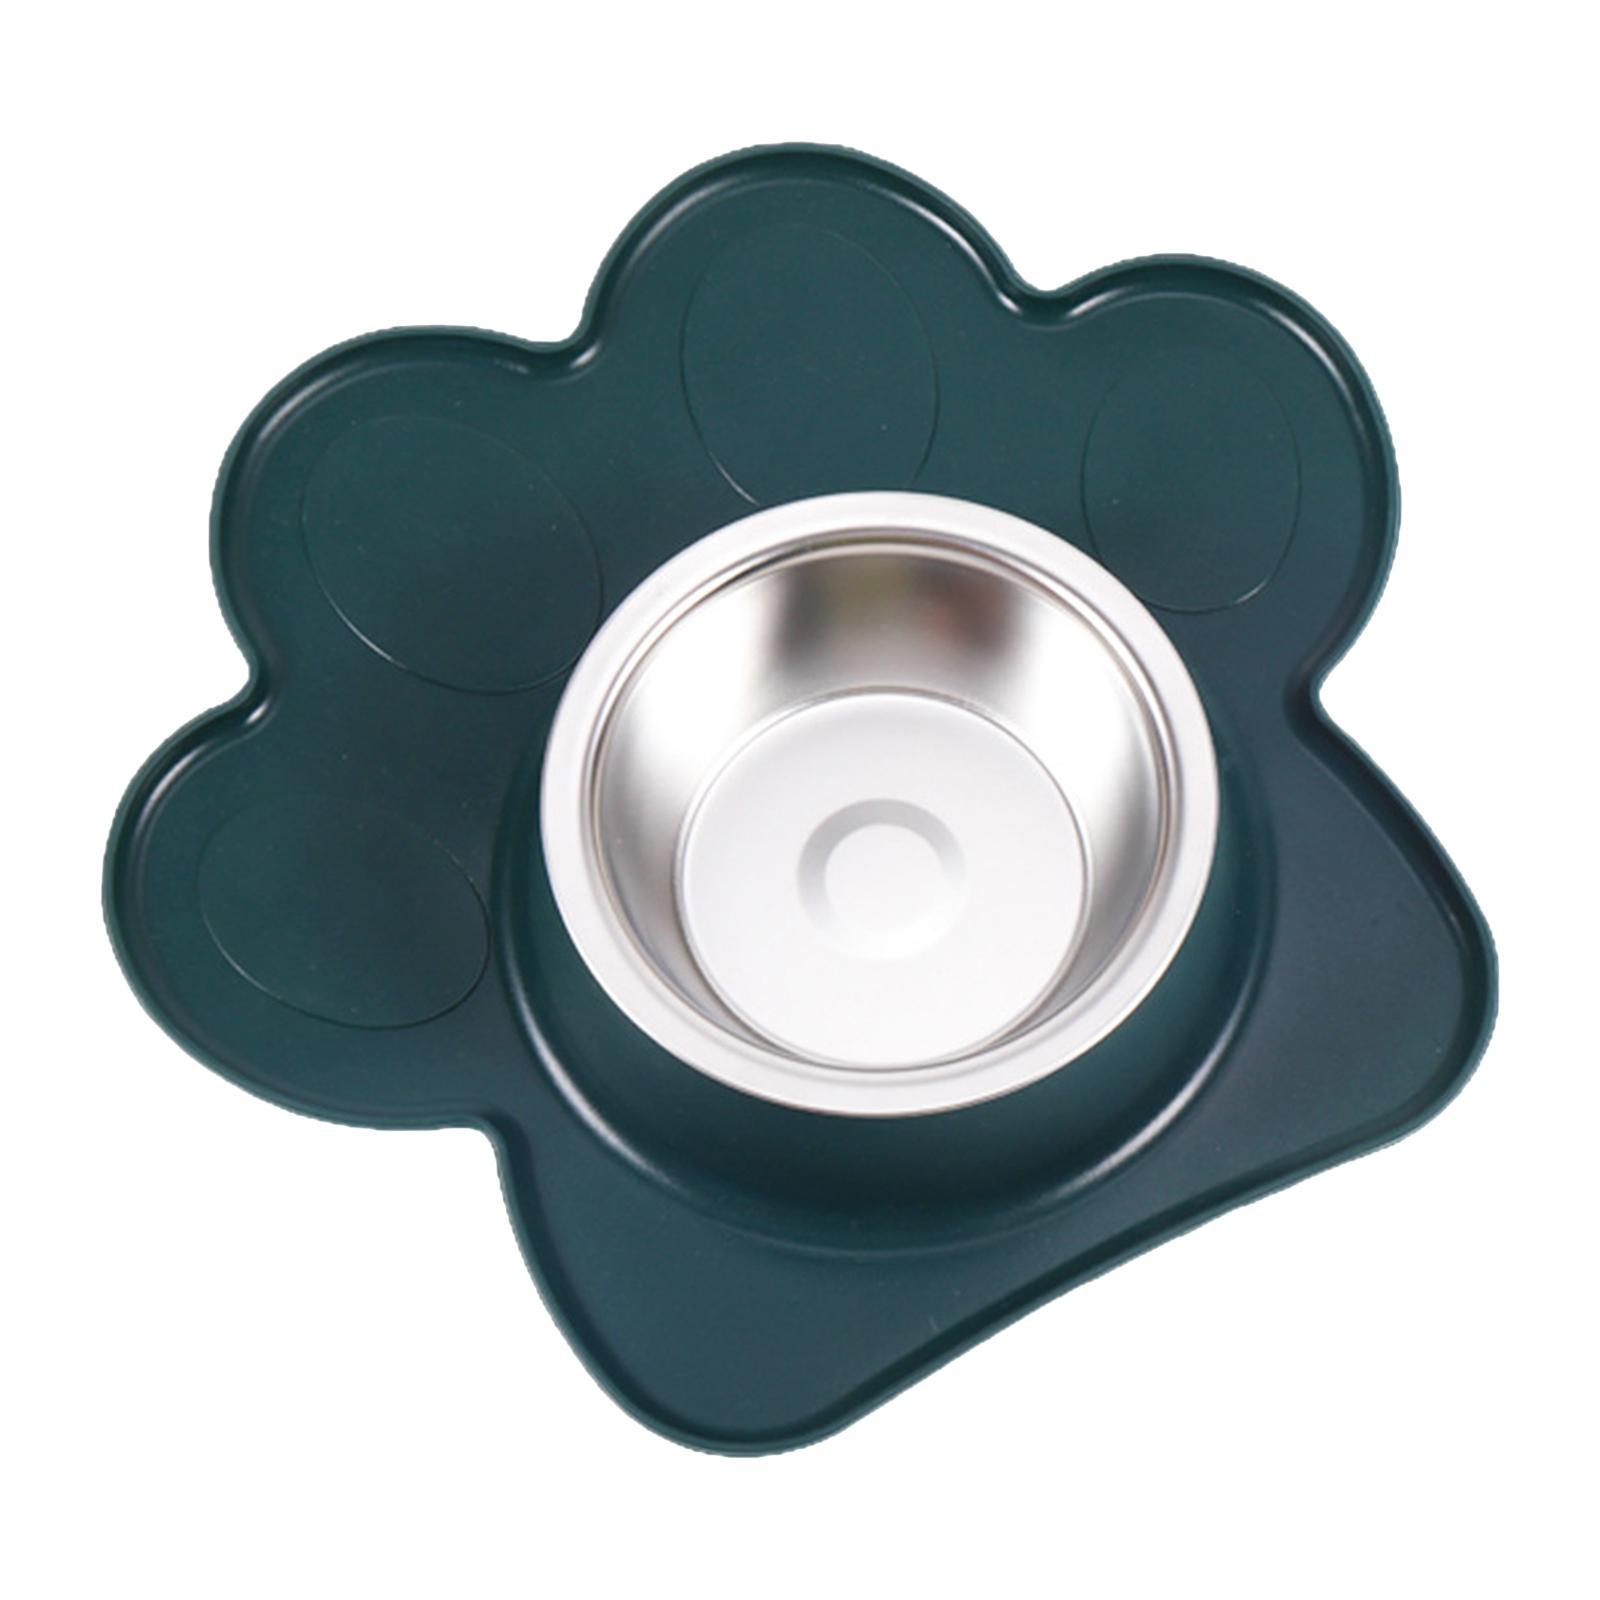 Dog Food Bowl Dog Bowl Stable Durable Kitty Drinking Bowl Pet Feeding Bowl Anti Slip Pet Bowl Pet Feeder Bowl for Small Medium Dogs